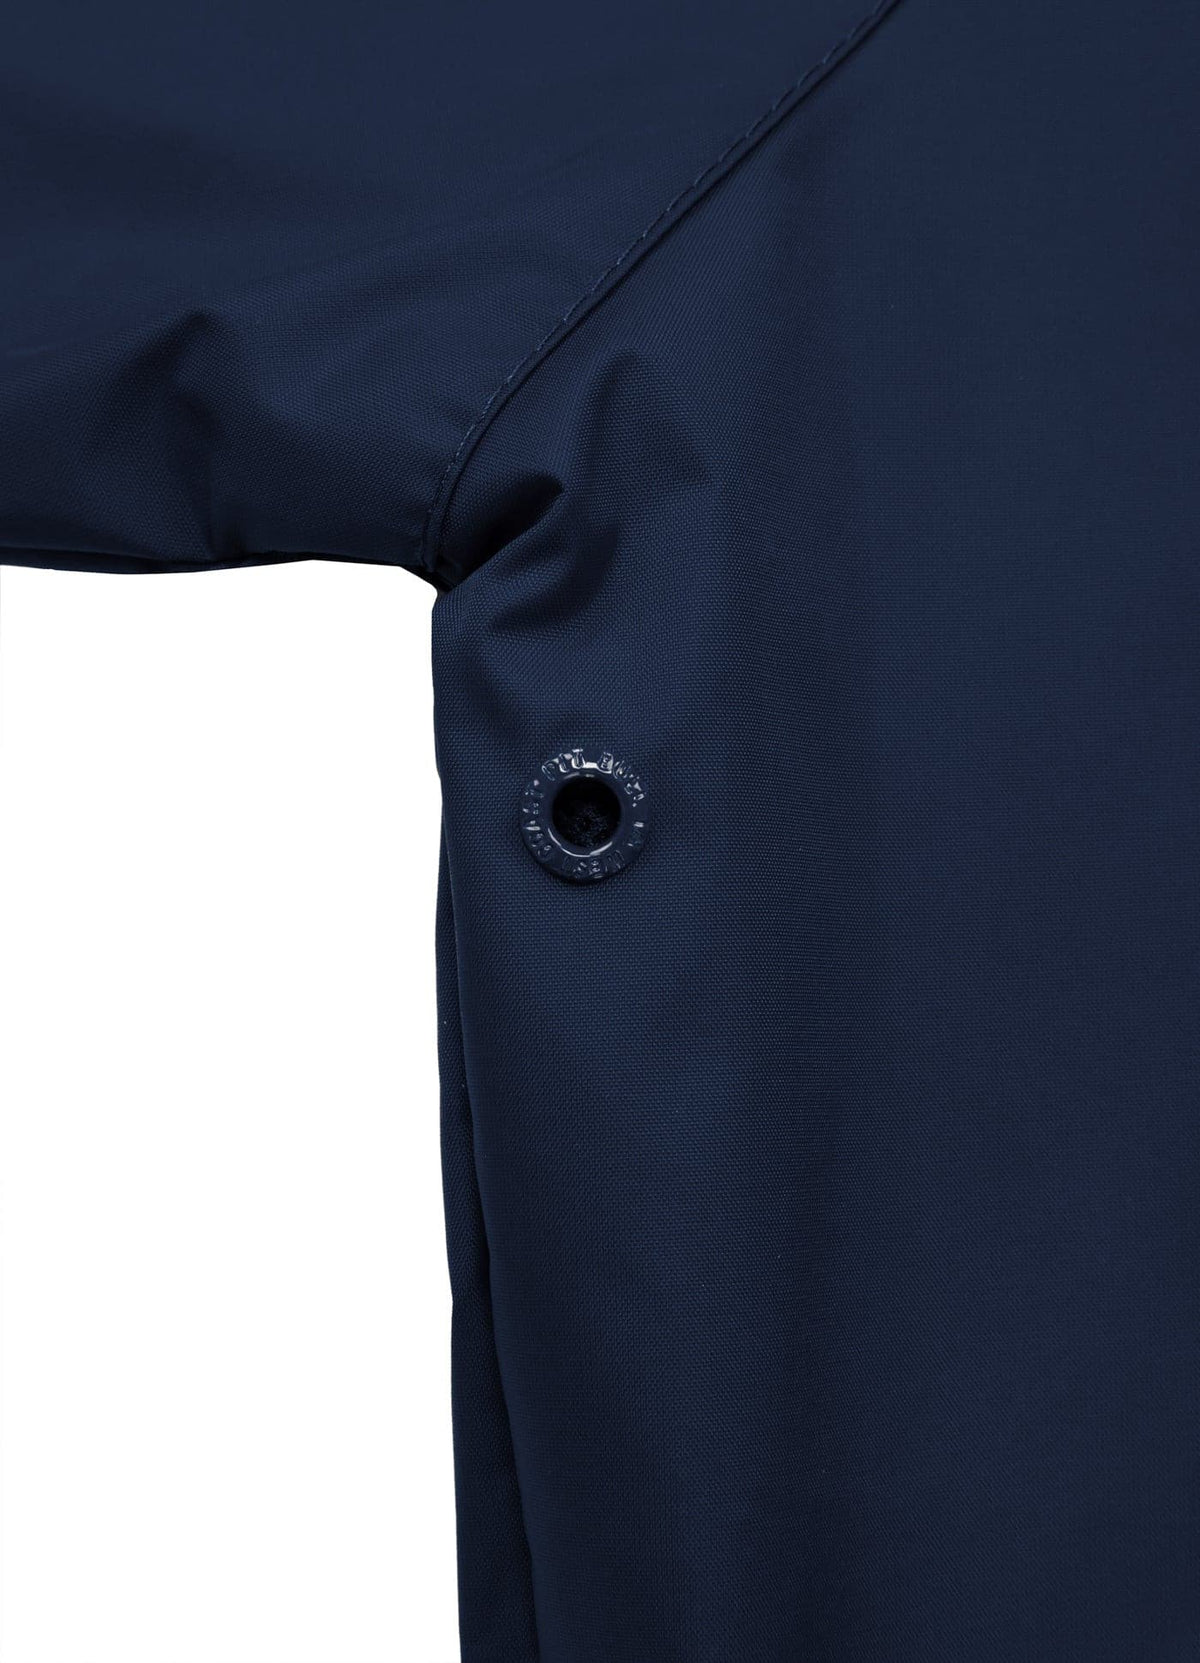 ATHLETIC Sleeve Dark Navy Jacket.